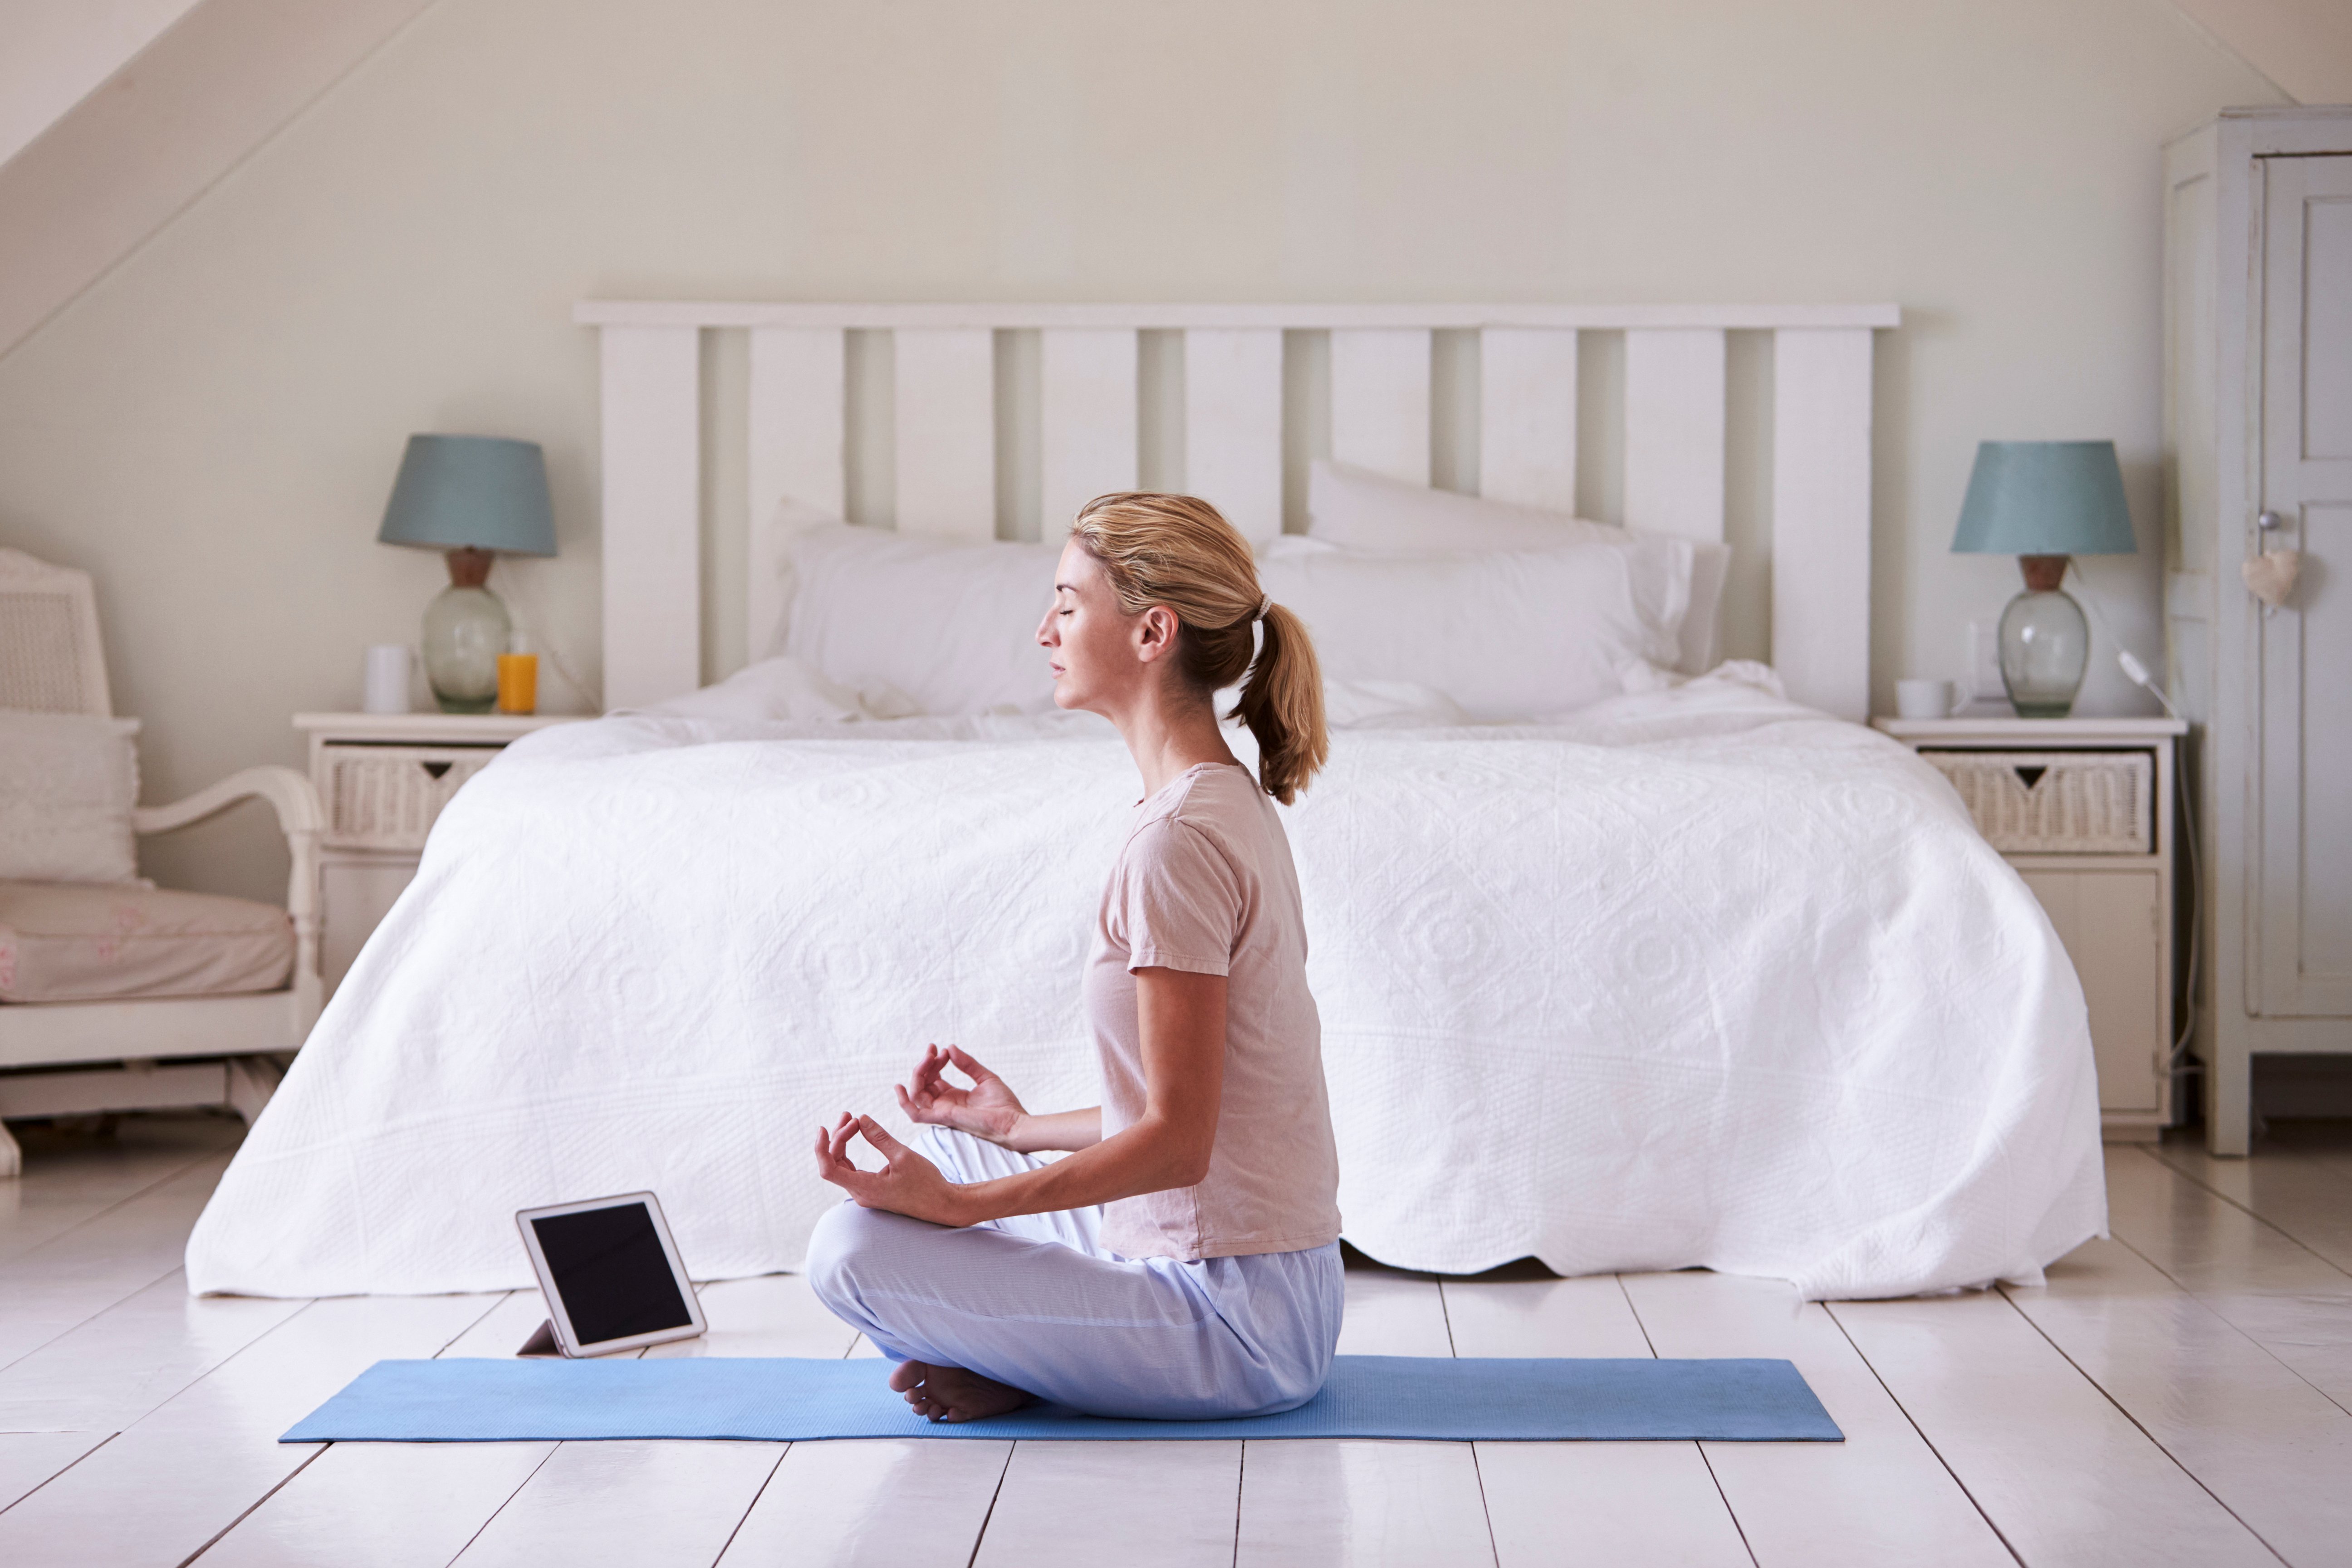 Canva - Woman with Digital Tablet Using Meditation App in Bedroom